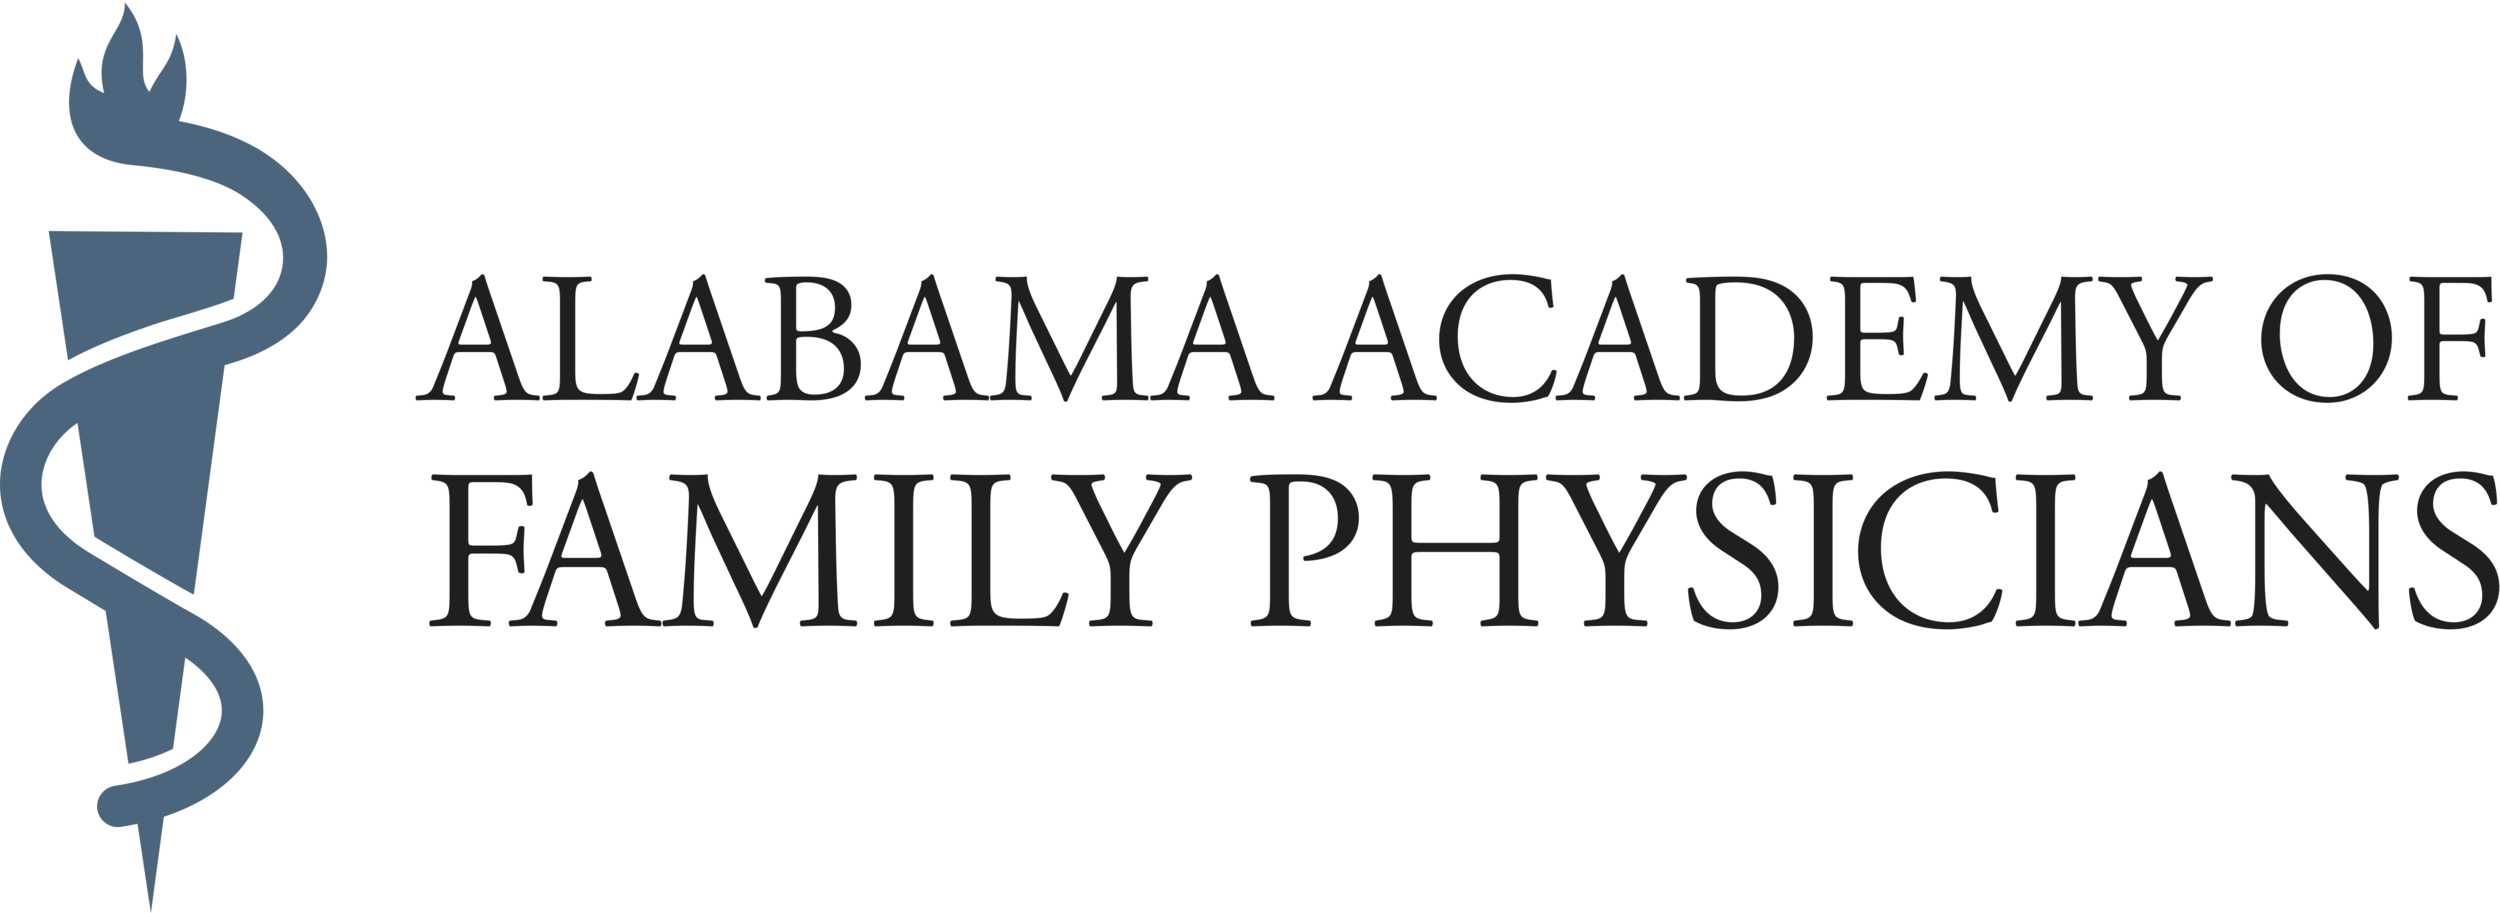 Alabama Academy of Family Physicians